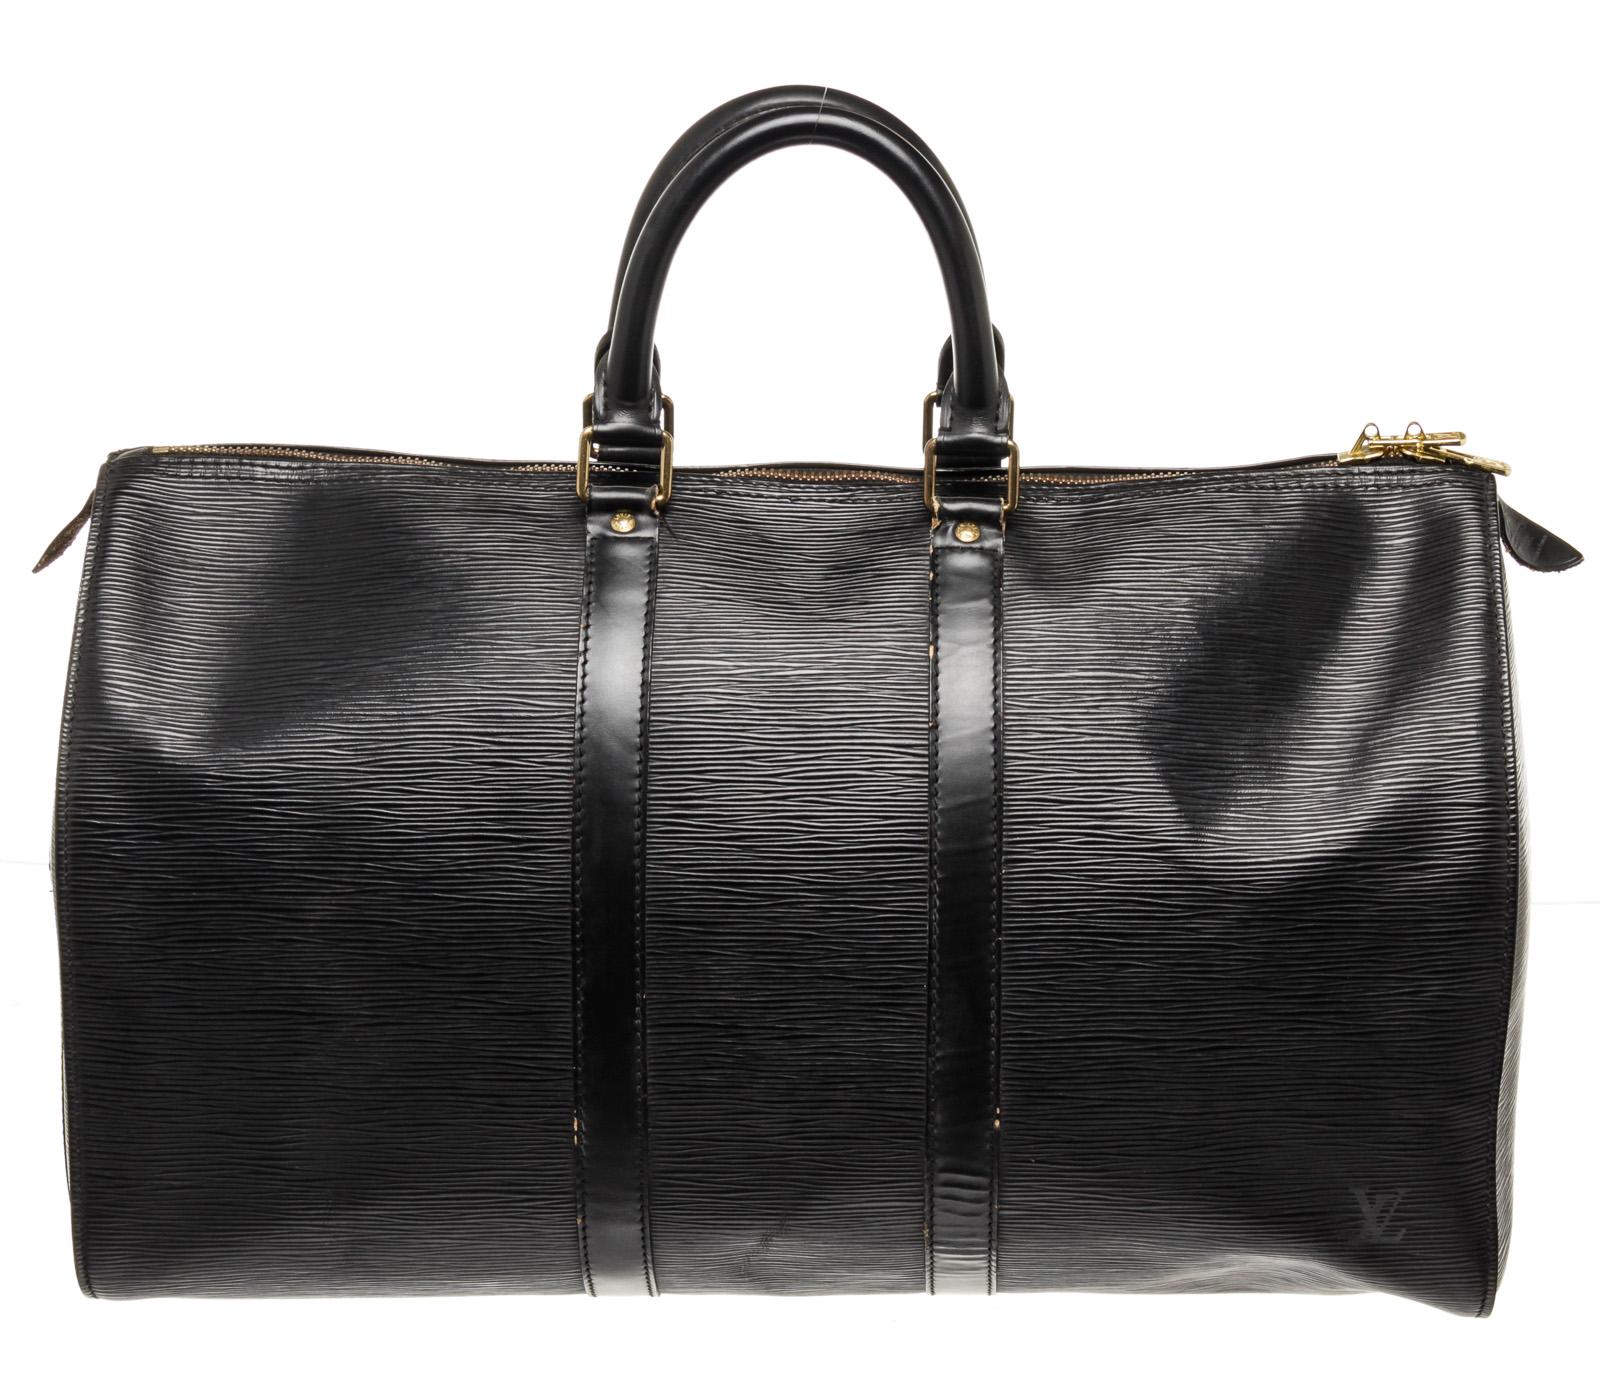 Louis Vuitton Black Epi Leather Keepall 45cm Travel Bag with epi leather, silver-toneÂ hardware, trim tan vachetta leather, dual top handle, adjustableÂ shoulder strapÂ and zipperÂ closure.

50908MSC